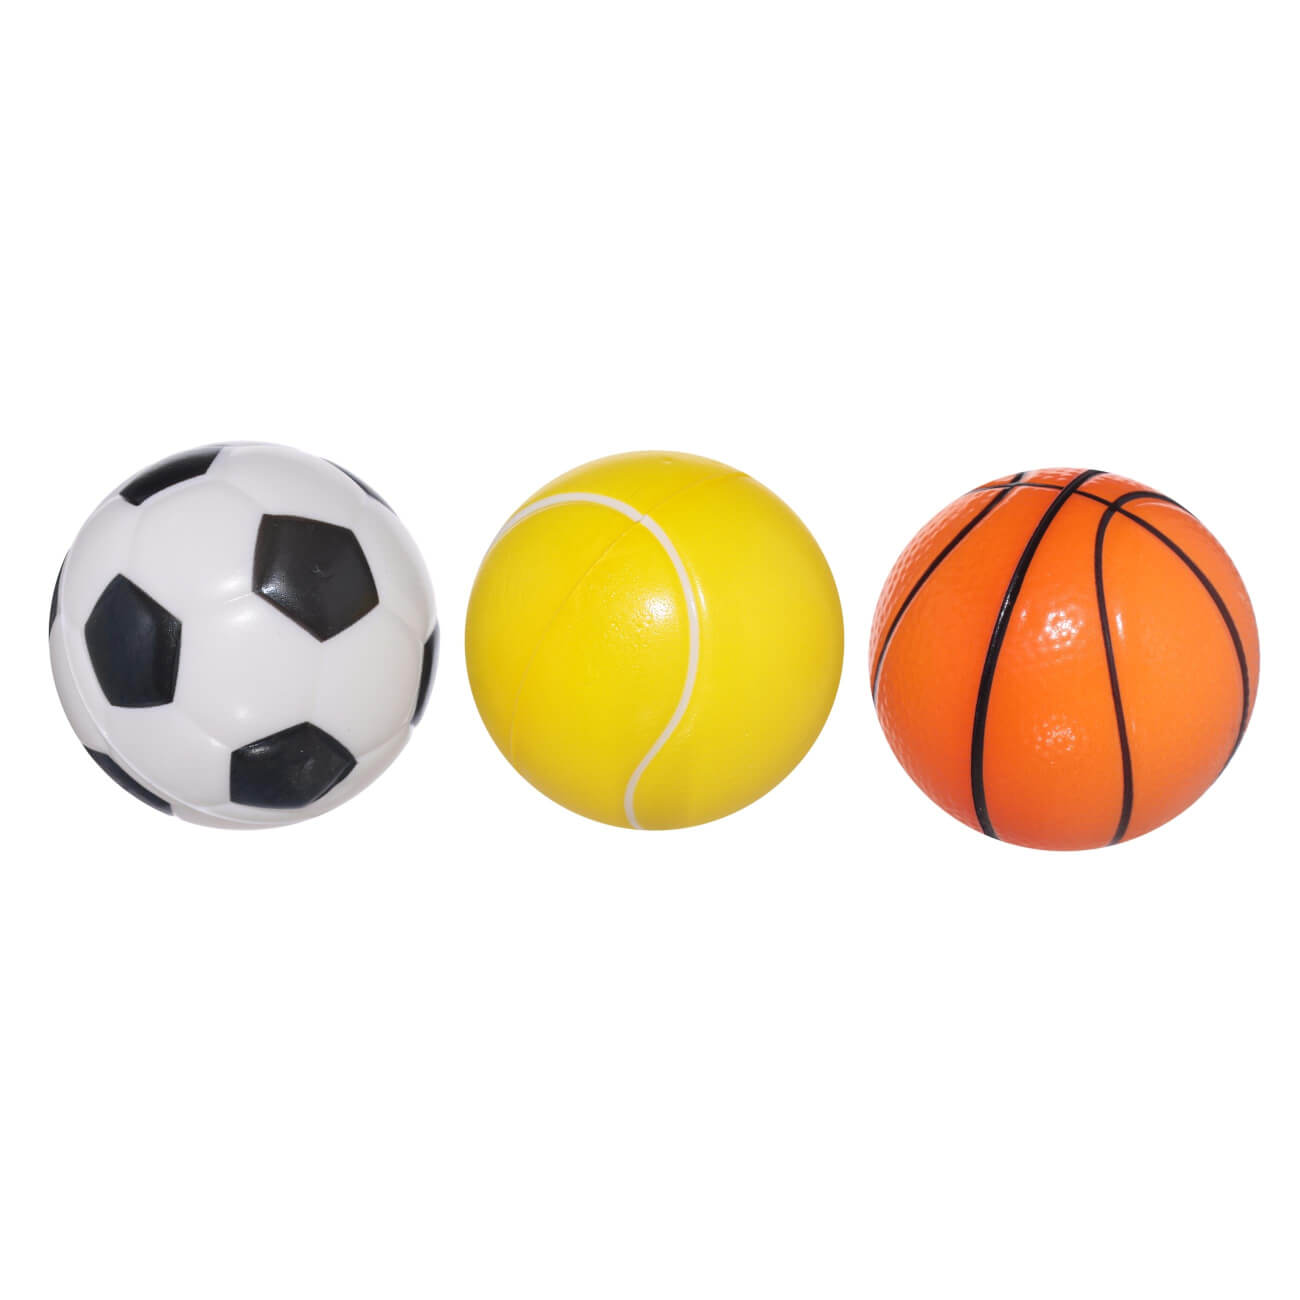 Мяч, 6 см, 3 шт, полиуретан, цветной, Футбол/Баскетбол/Теннис, Game